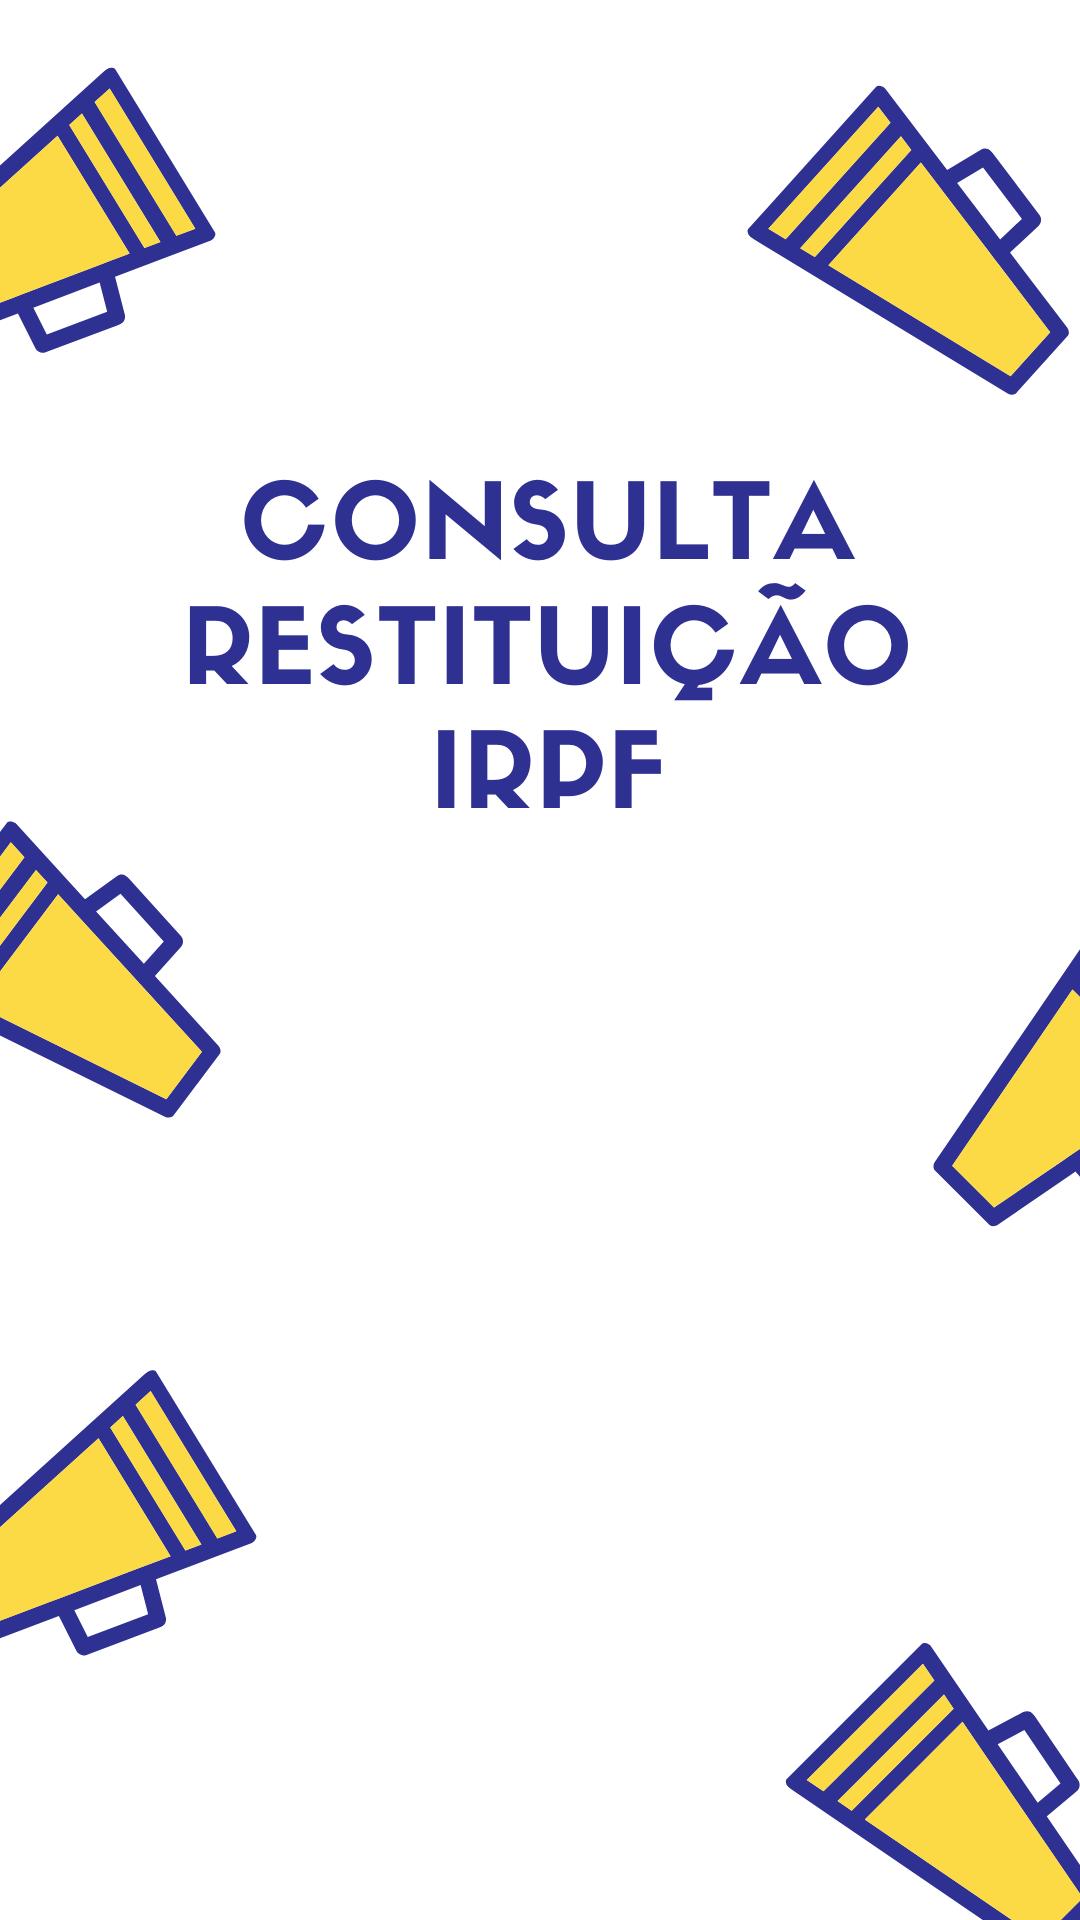 Consulta Restituicao Irpf For Android Apk Download